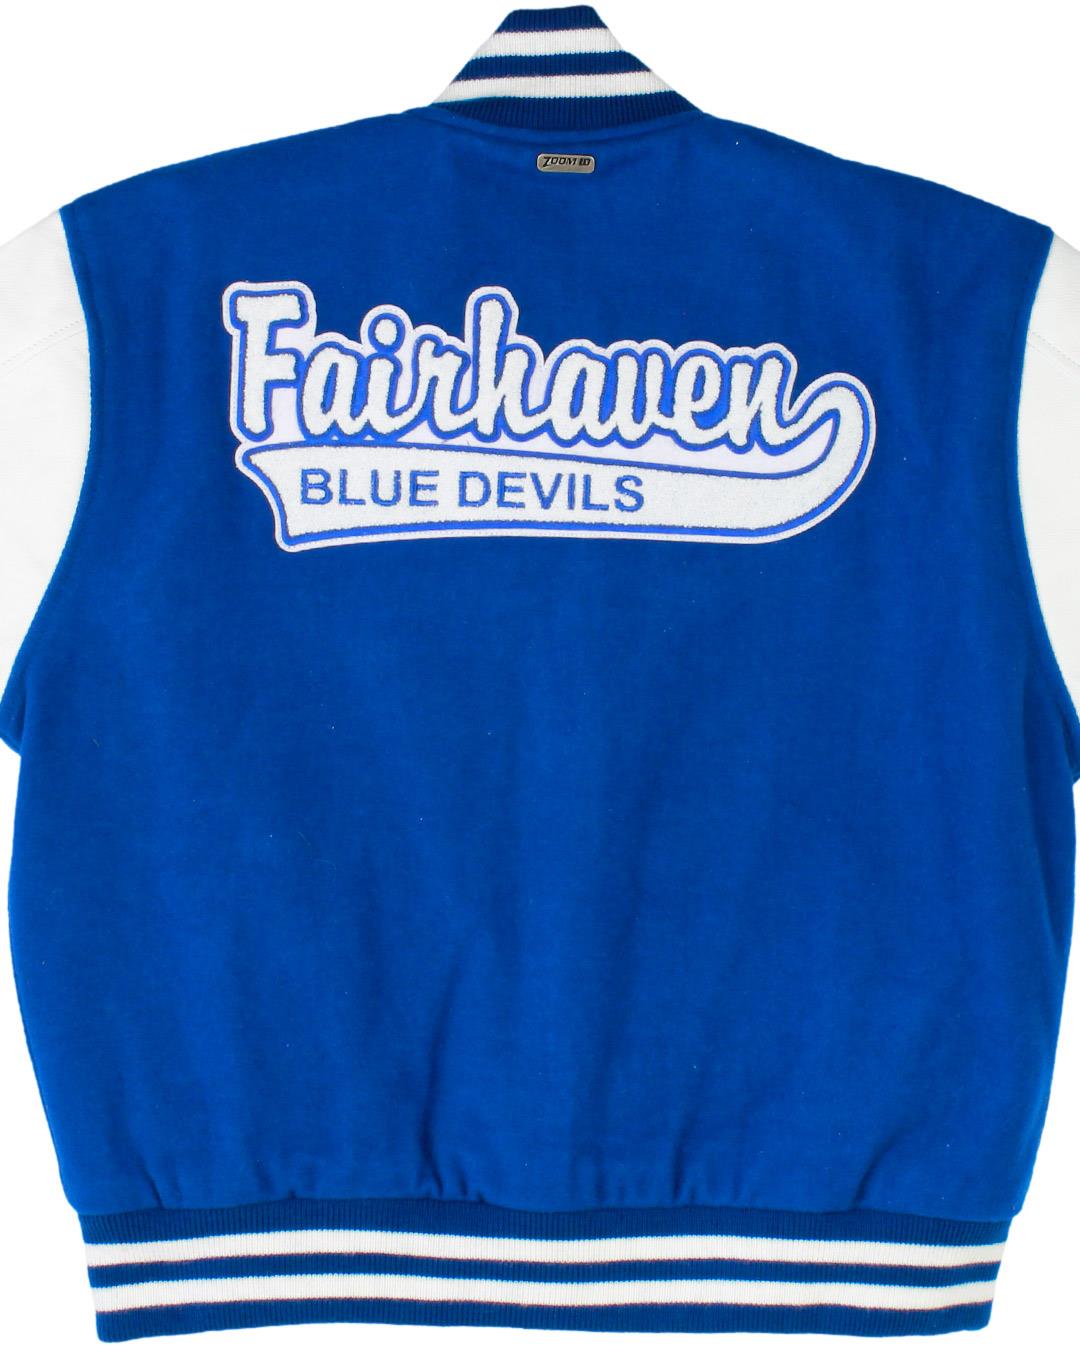 Fairhaven High School Varsity Jacket, Fairhaven MA - Back